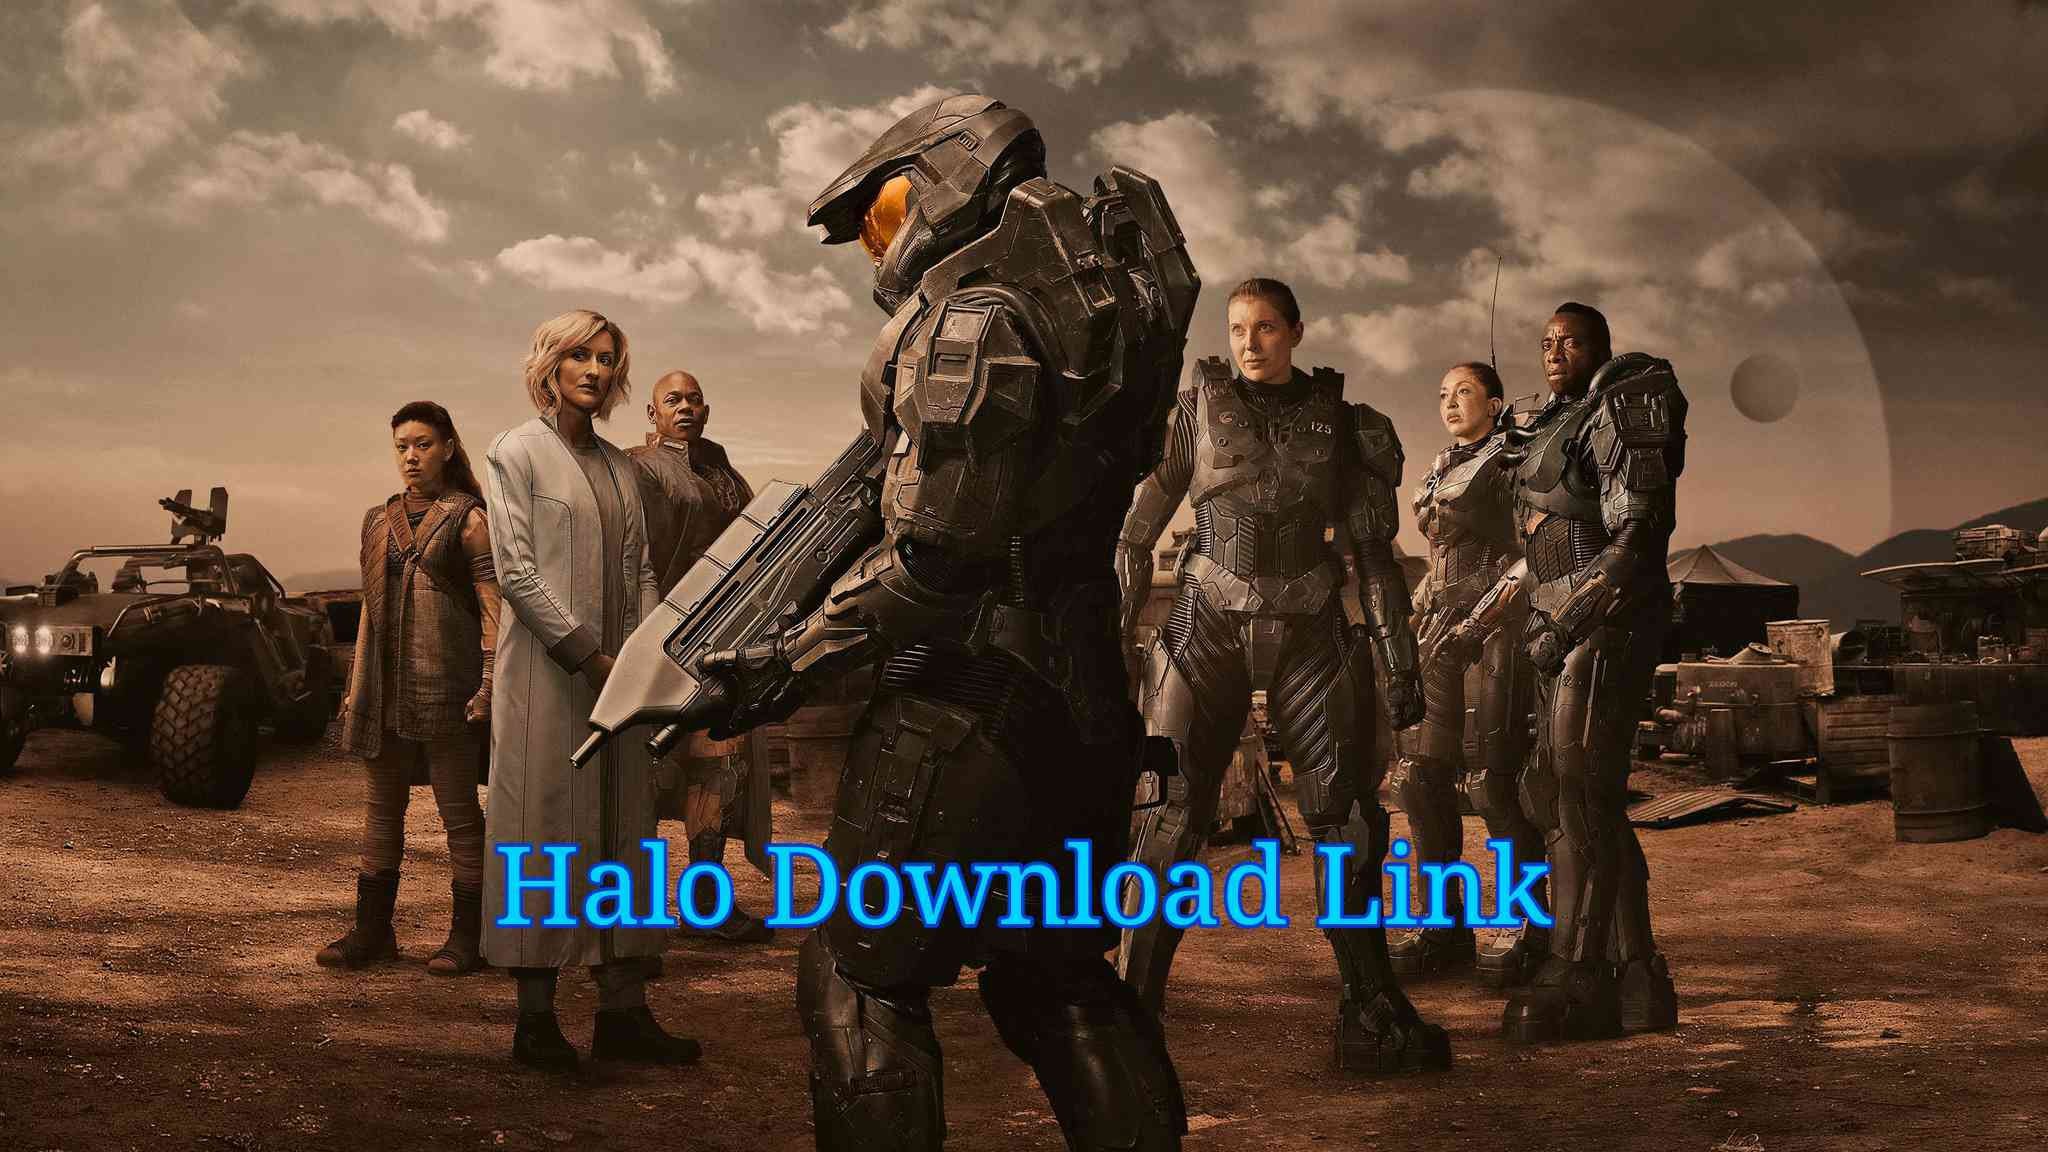 halo-series-720p-google-drive-download-link